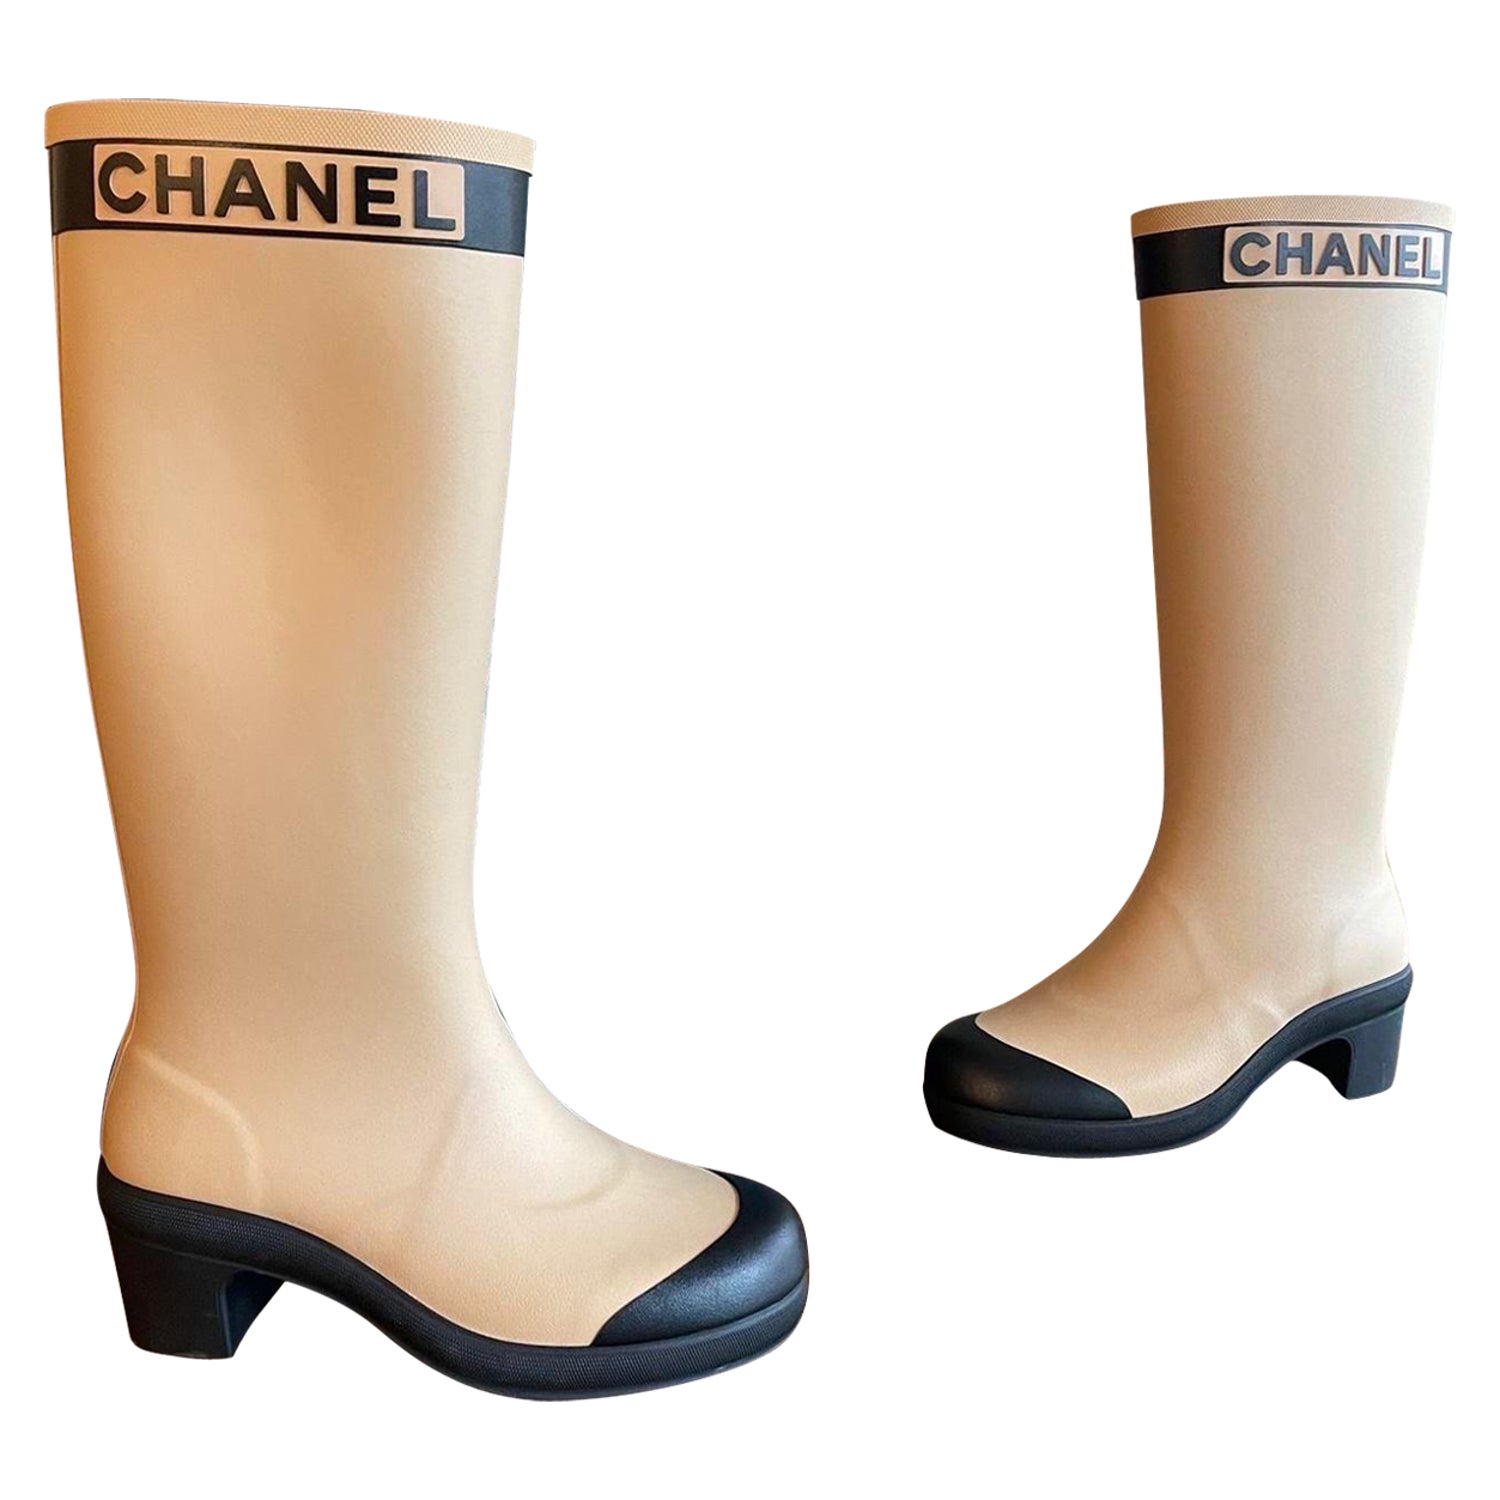 Lori Harvey Slips On Chanel Rain Boots With Leggings & Cropped Puffer –  Footwear News